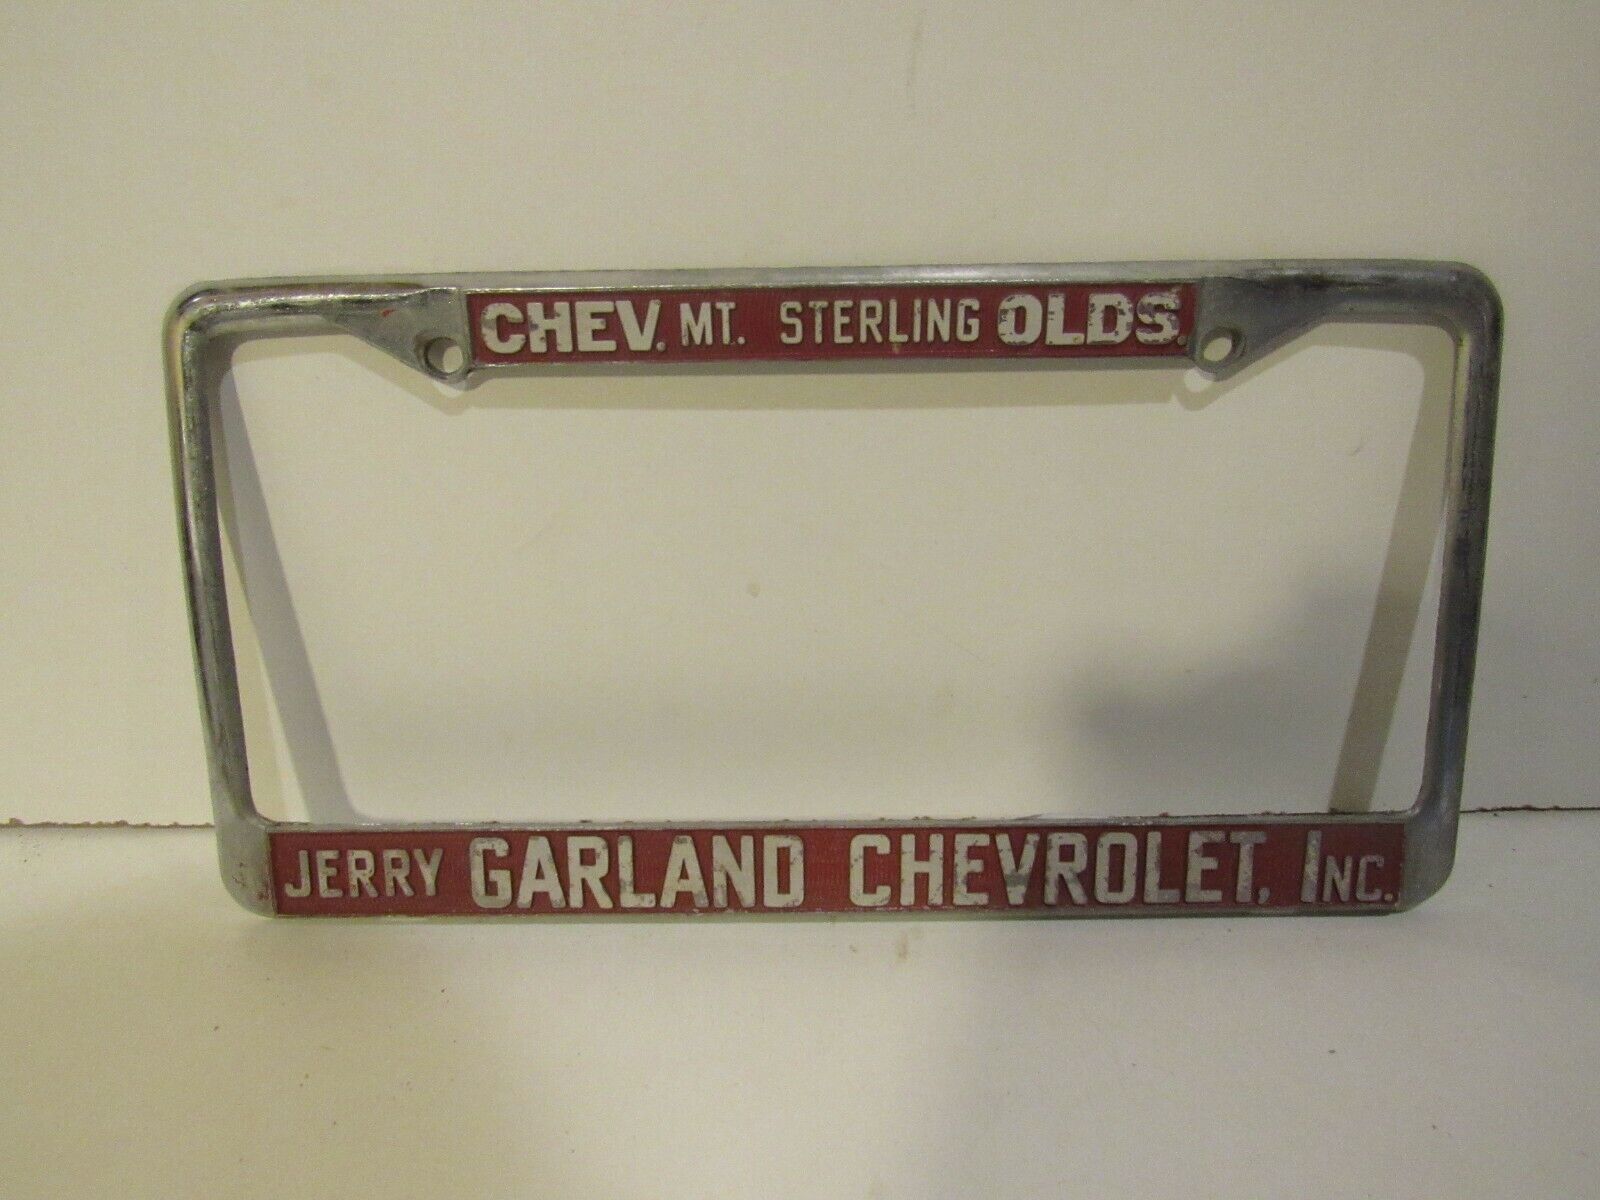 Mt. Sterling Chev Olds Jerry Garland  Dealership Metal License Plate Frame Rare